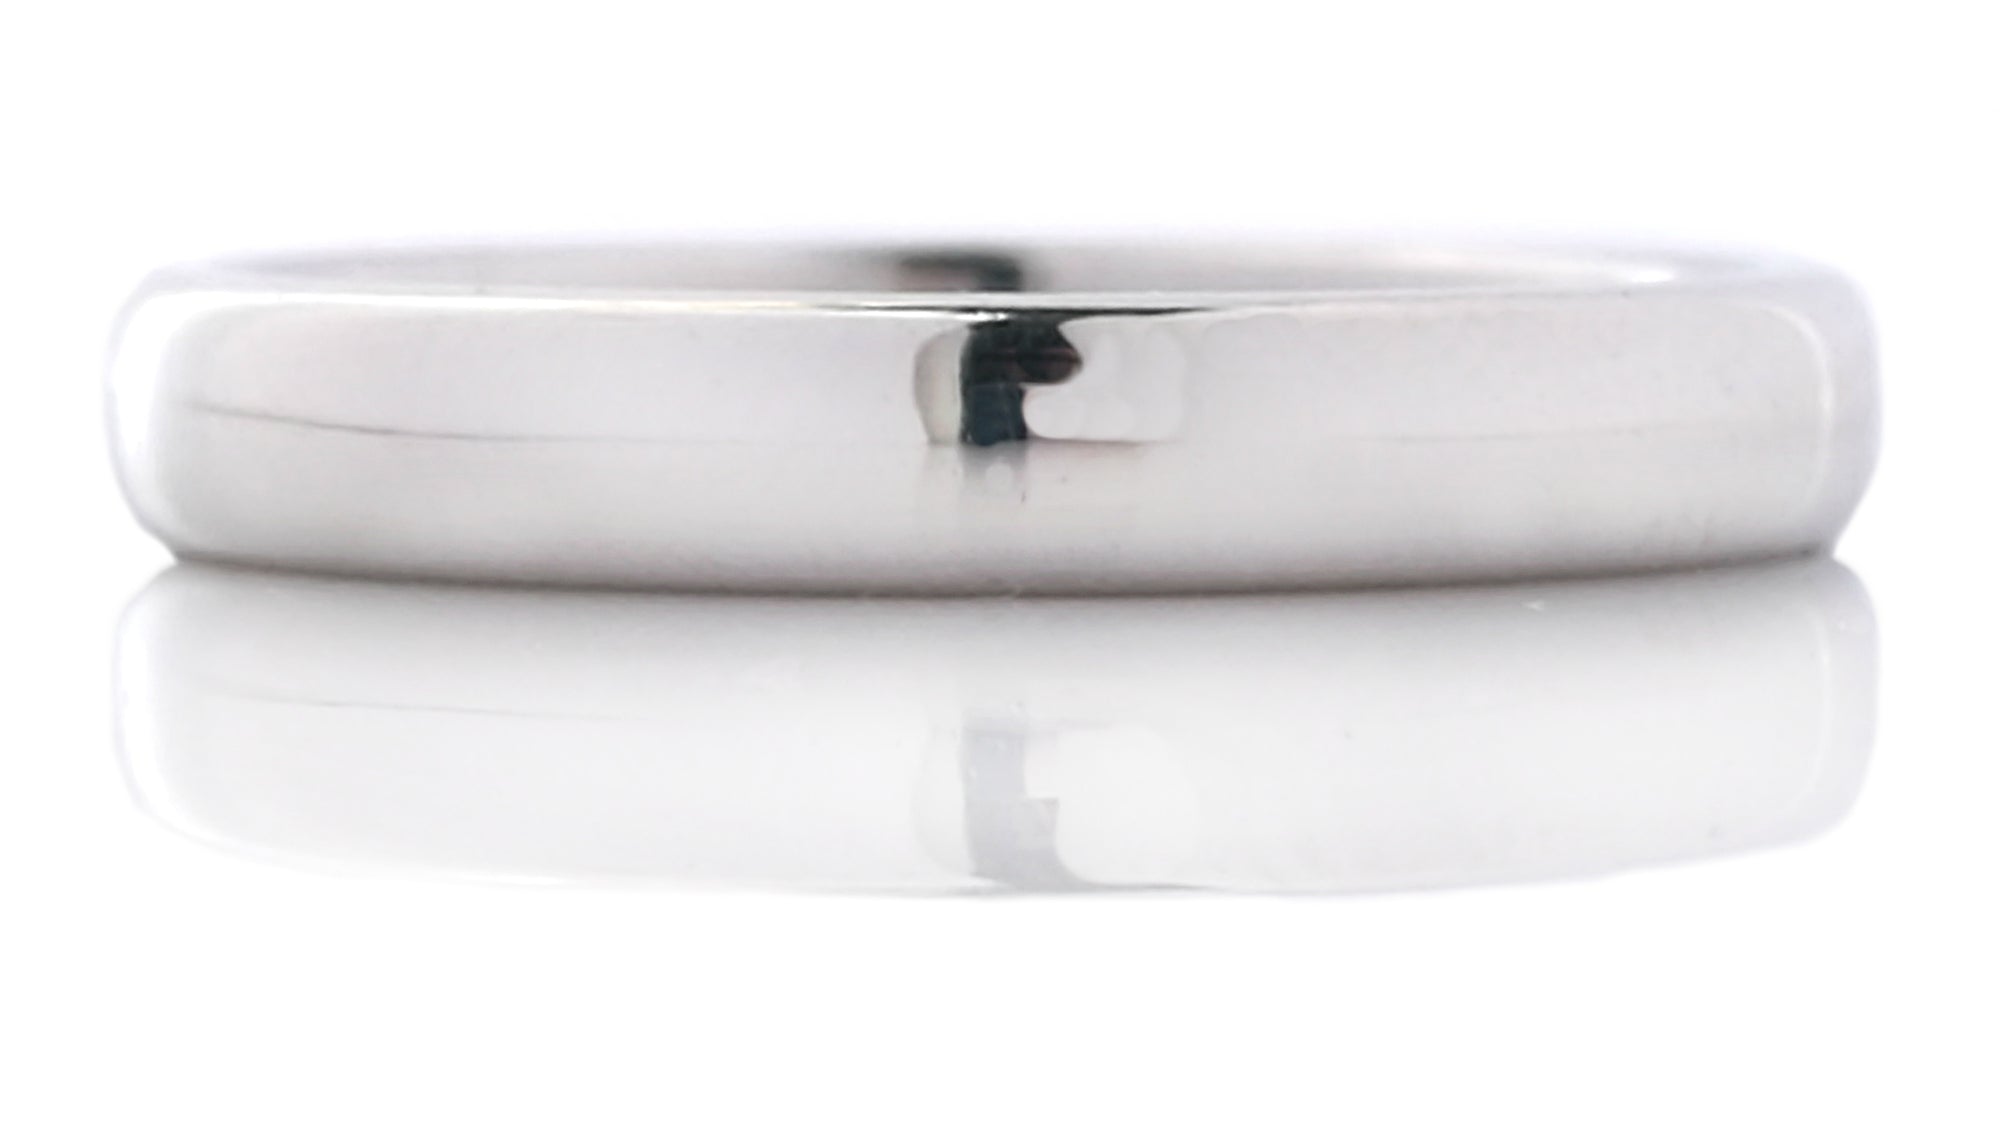 Tiffany & Co. 3mm Lucida Wedding Ring